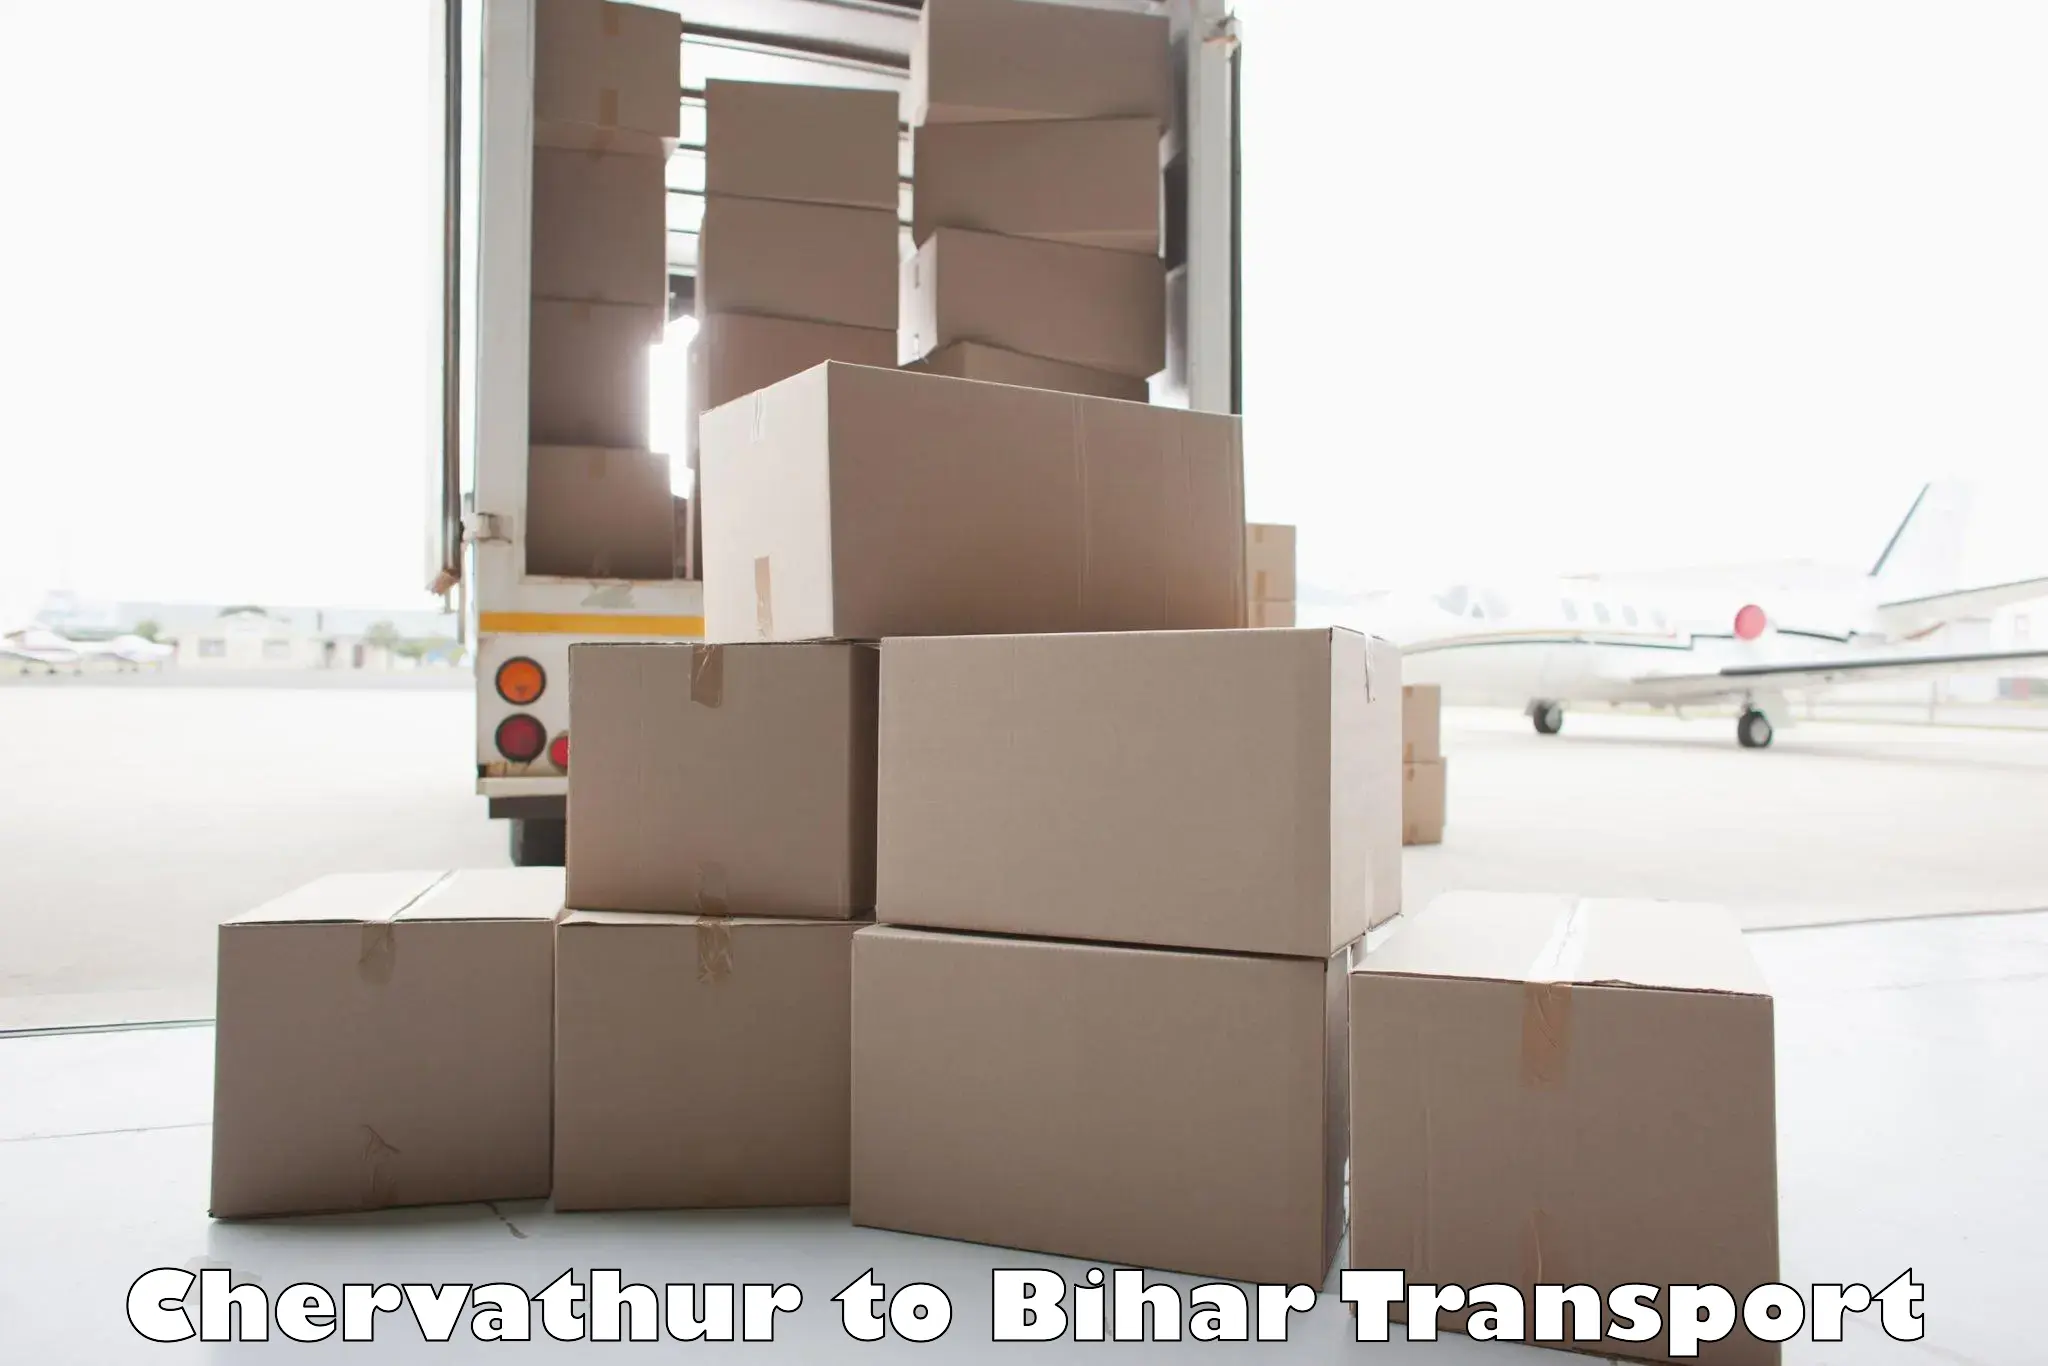 Daily transport service Chervathur to Brahmapur